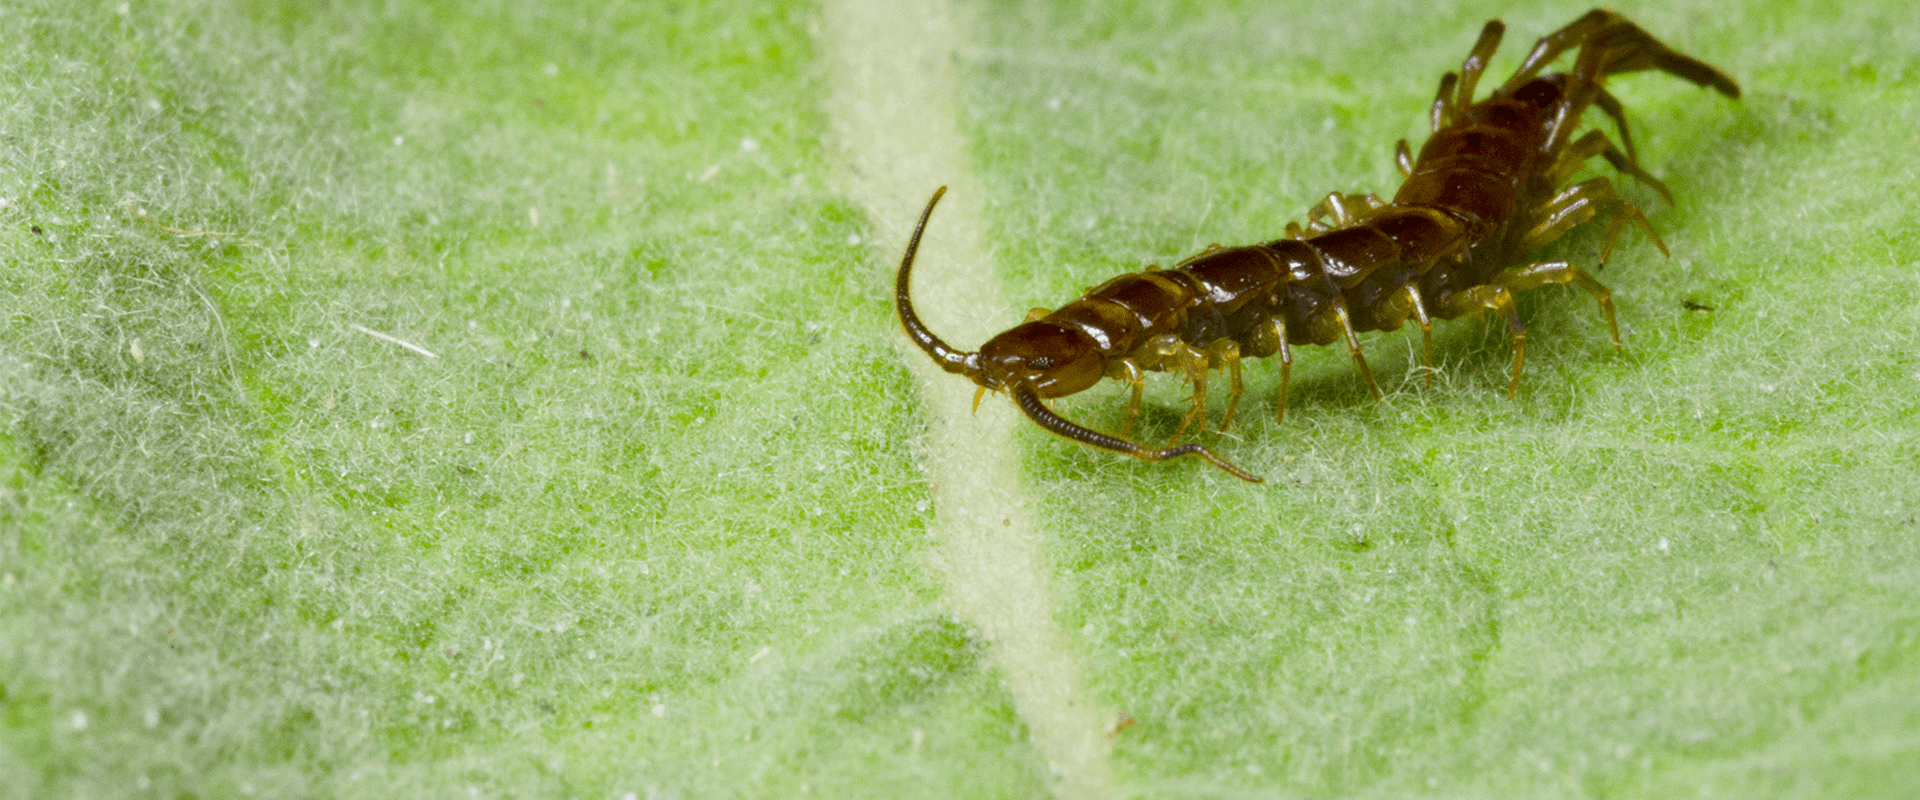 upclose image of a centipede